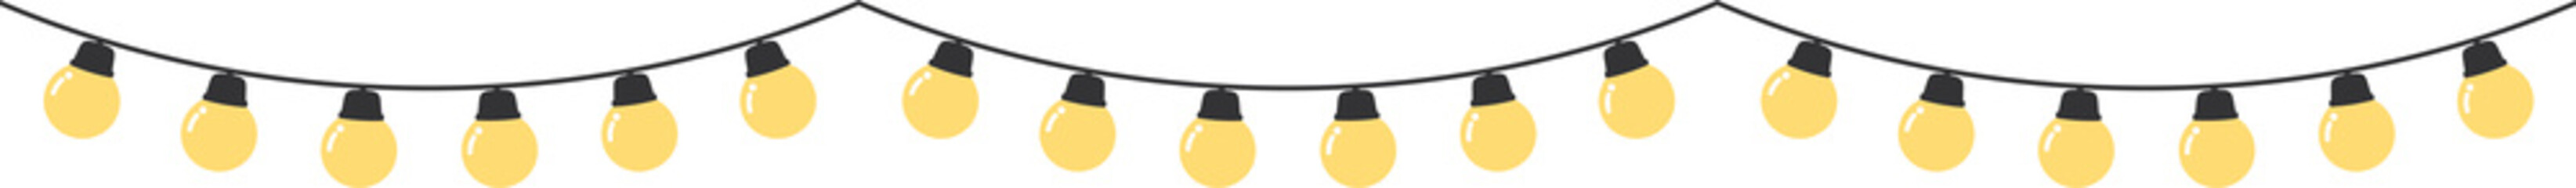 Seamless festive yellow Christmas string light border. Flat design illustration.	
